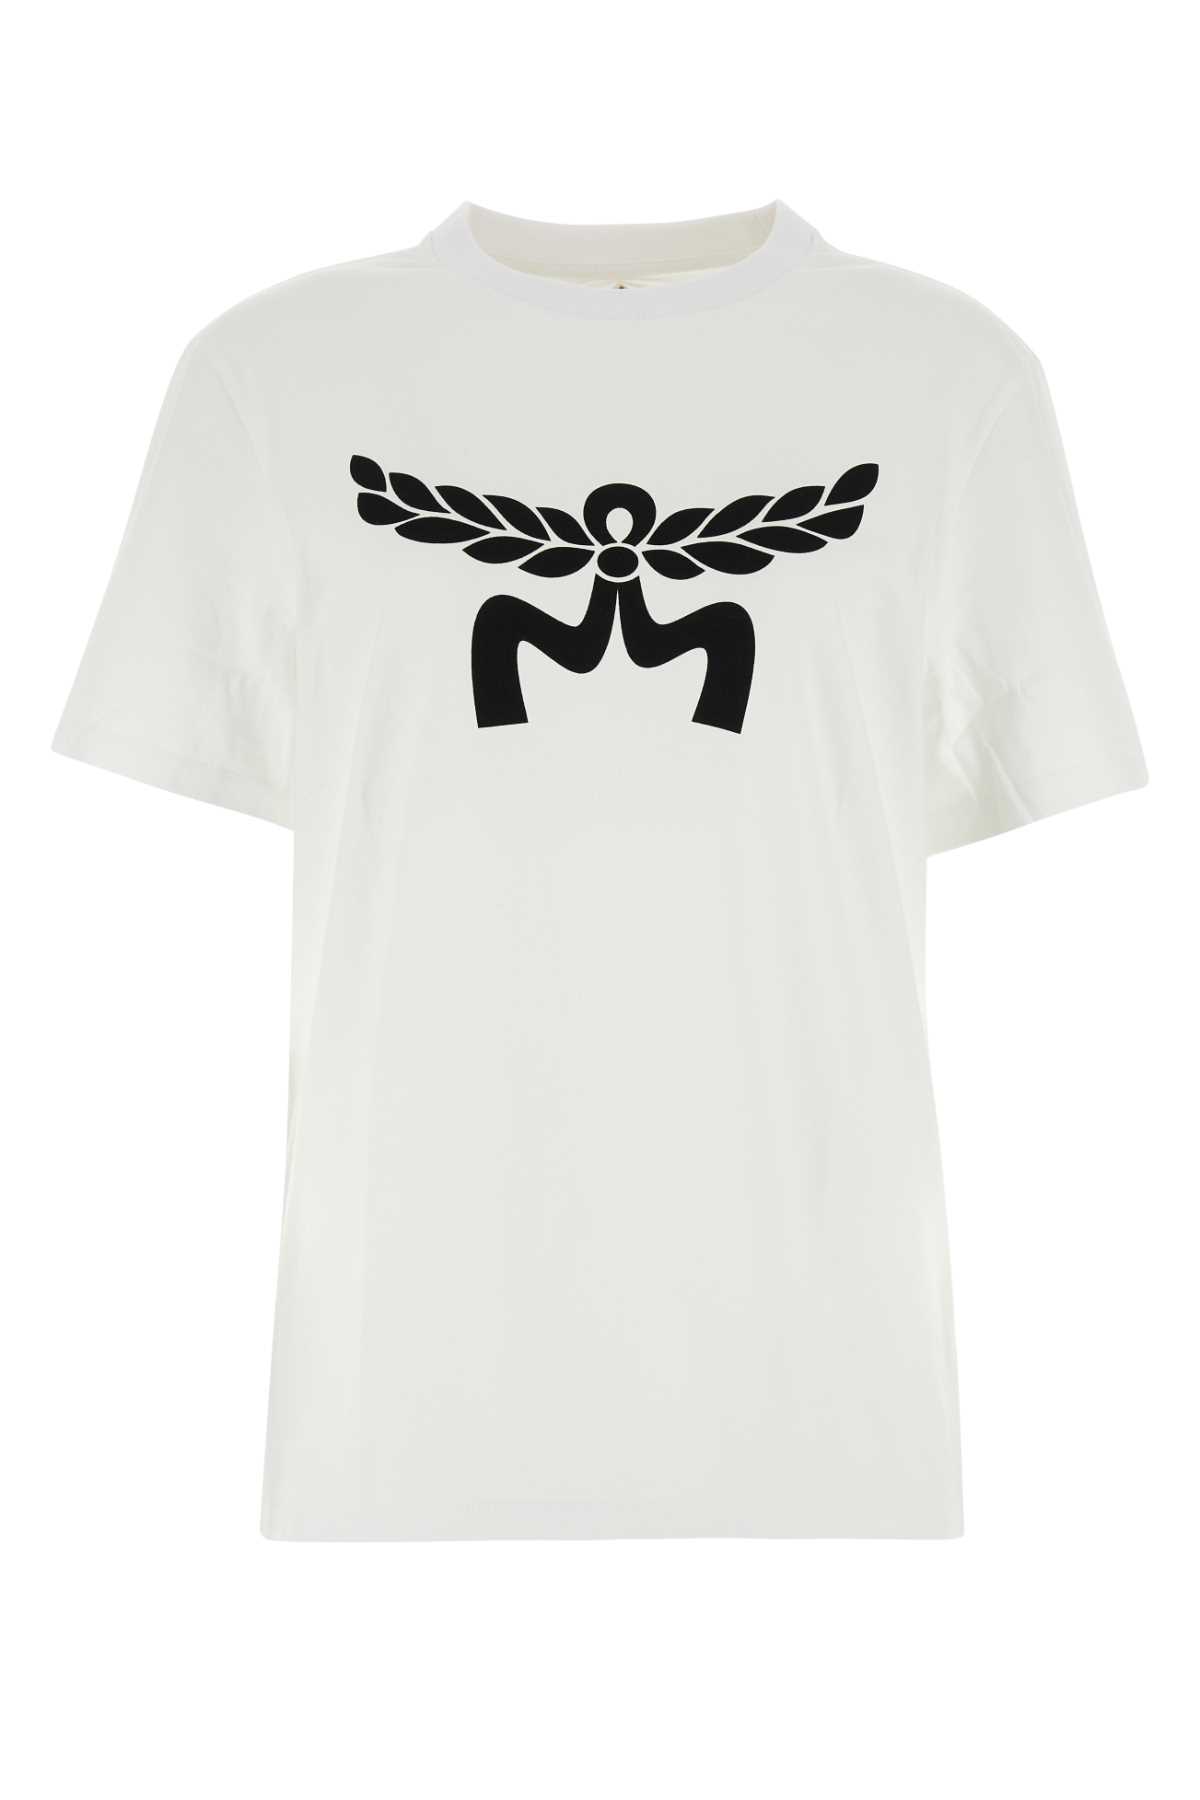 Shop Mcm White Cotton T-shirt